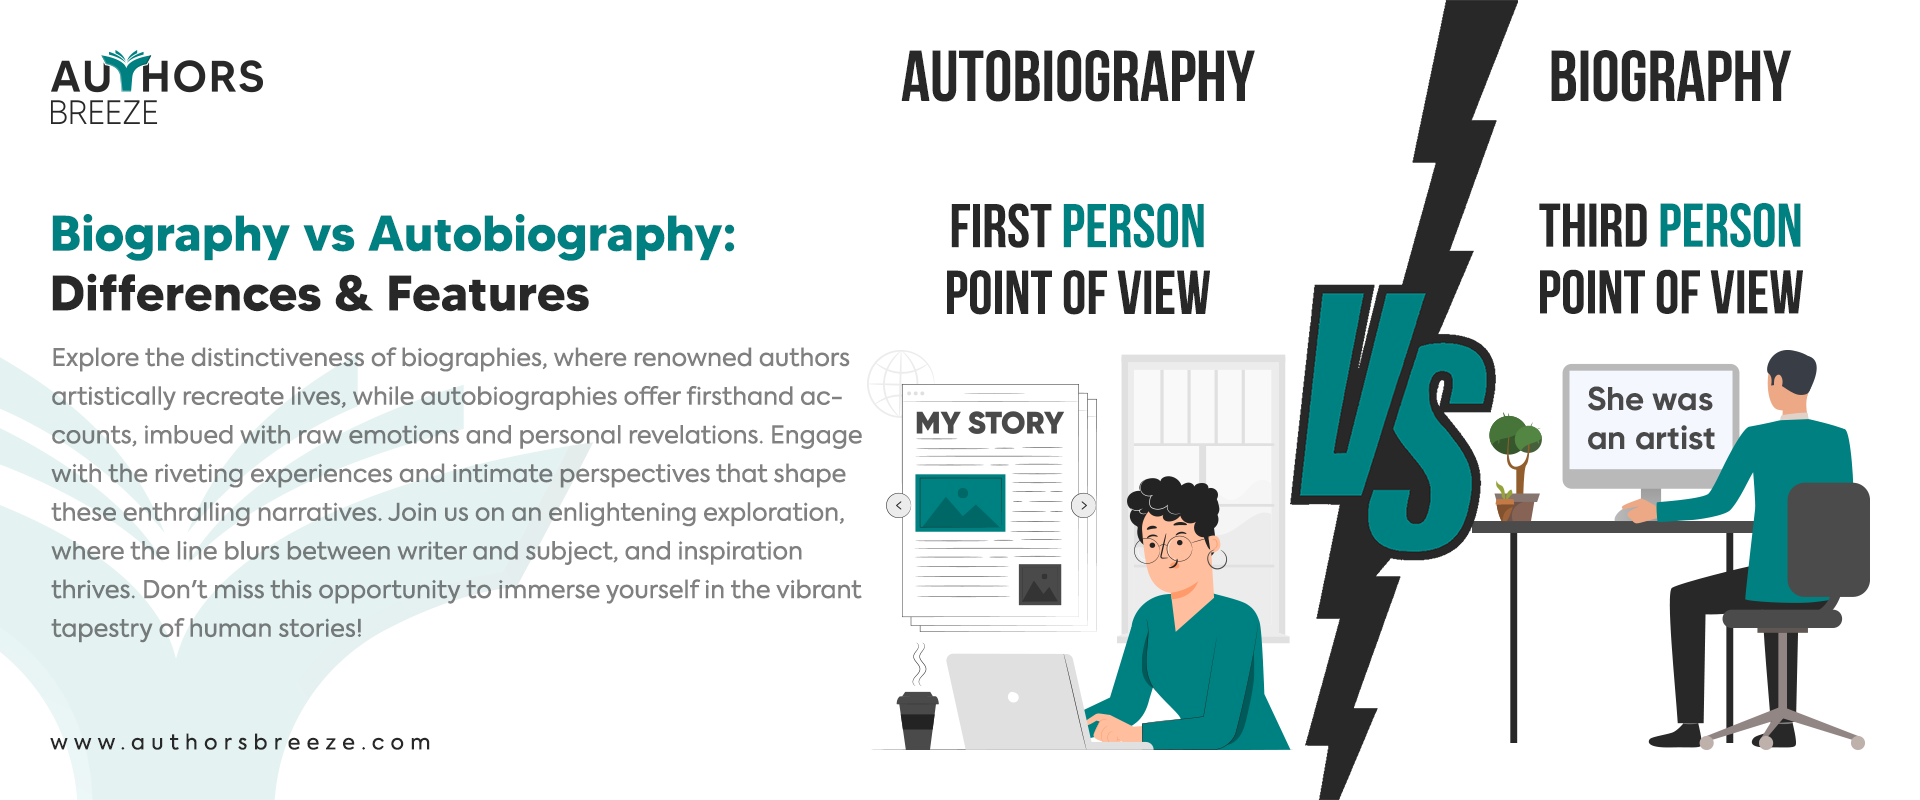 Biography vs Autobiography